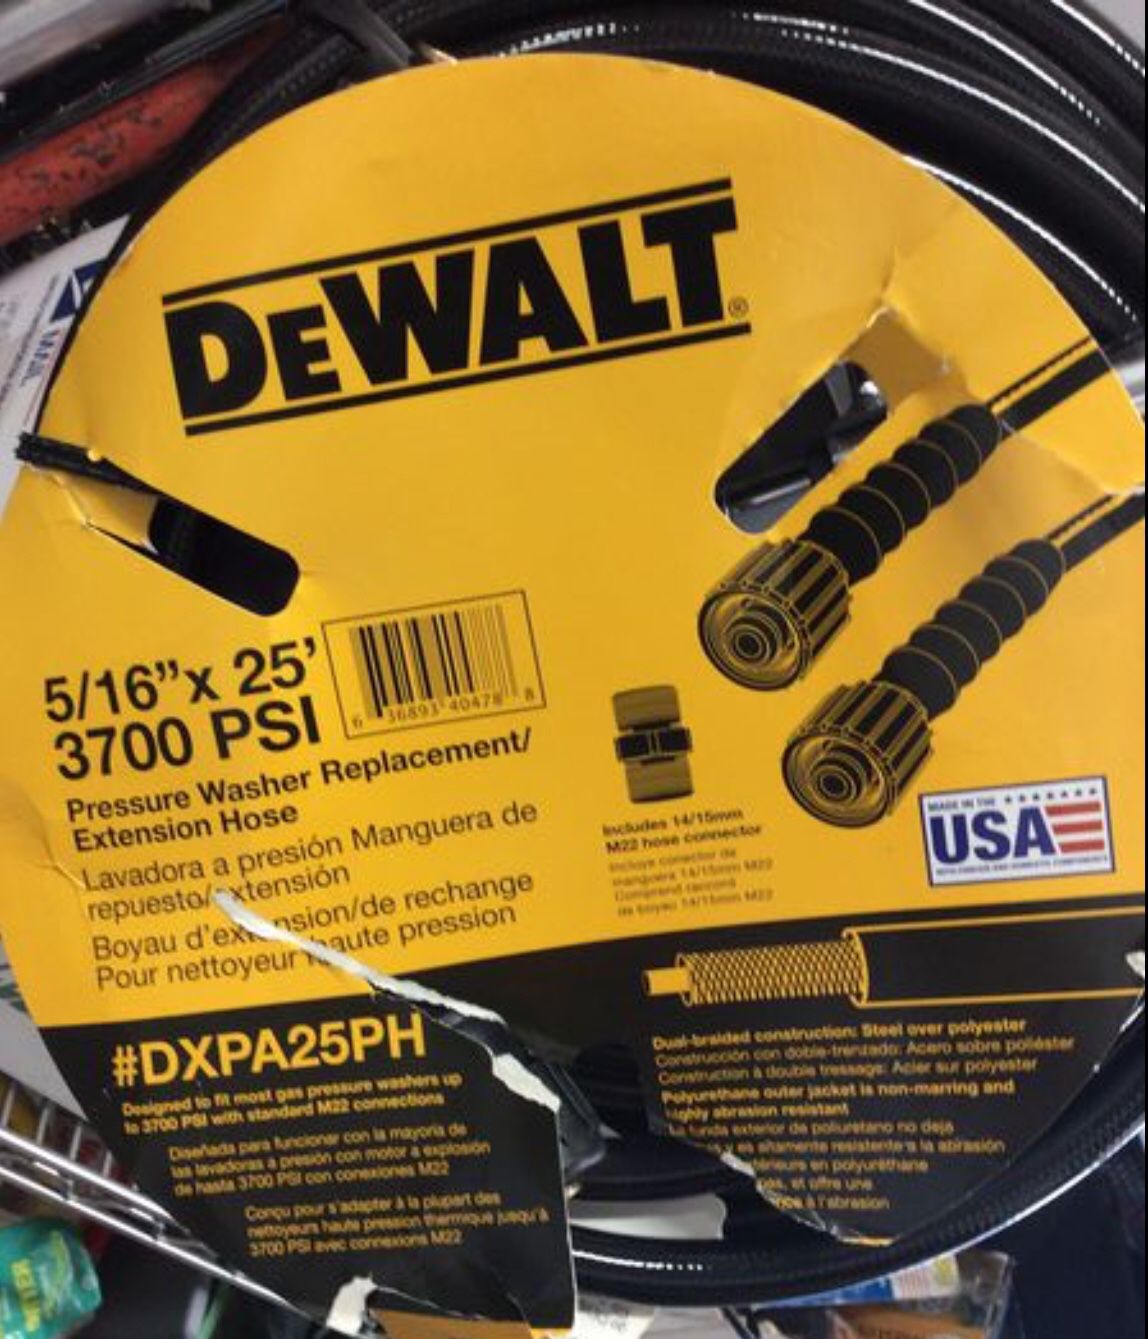 DeWalt DXPA25PH 25 Ft. 3700 PSI Pressure Washer Hose **NEW** (19-1288)